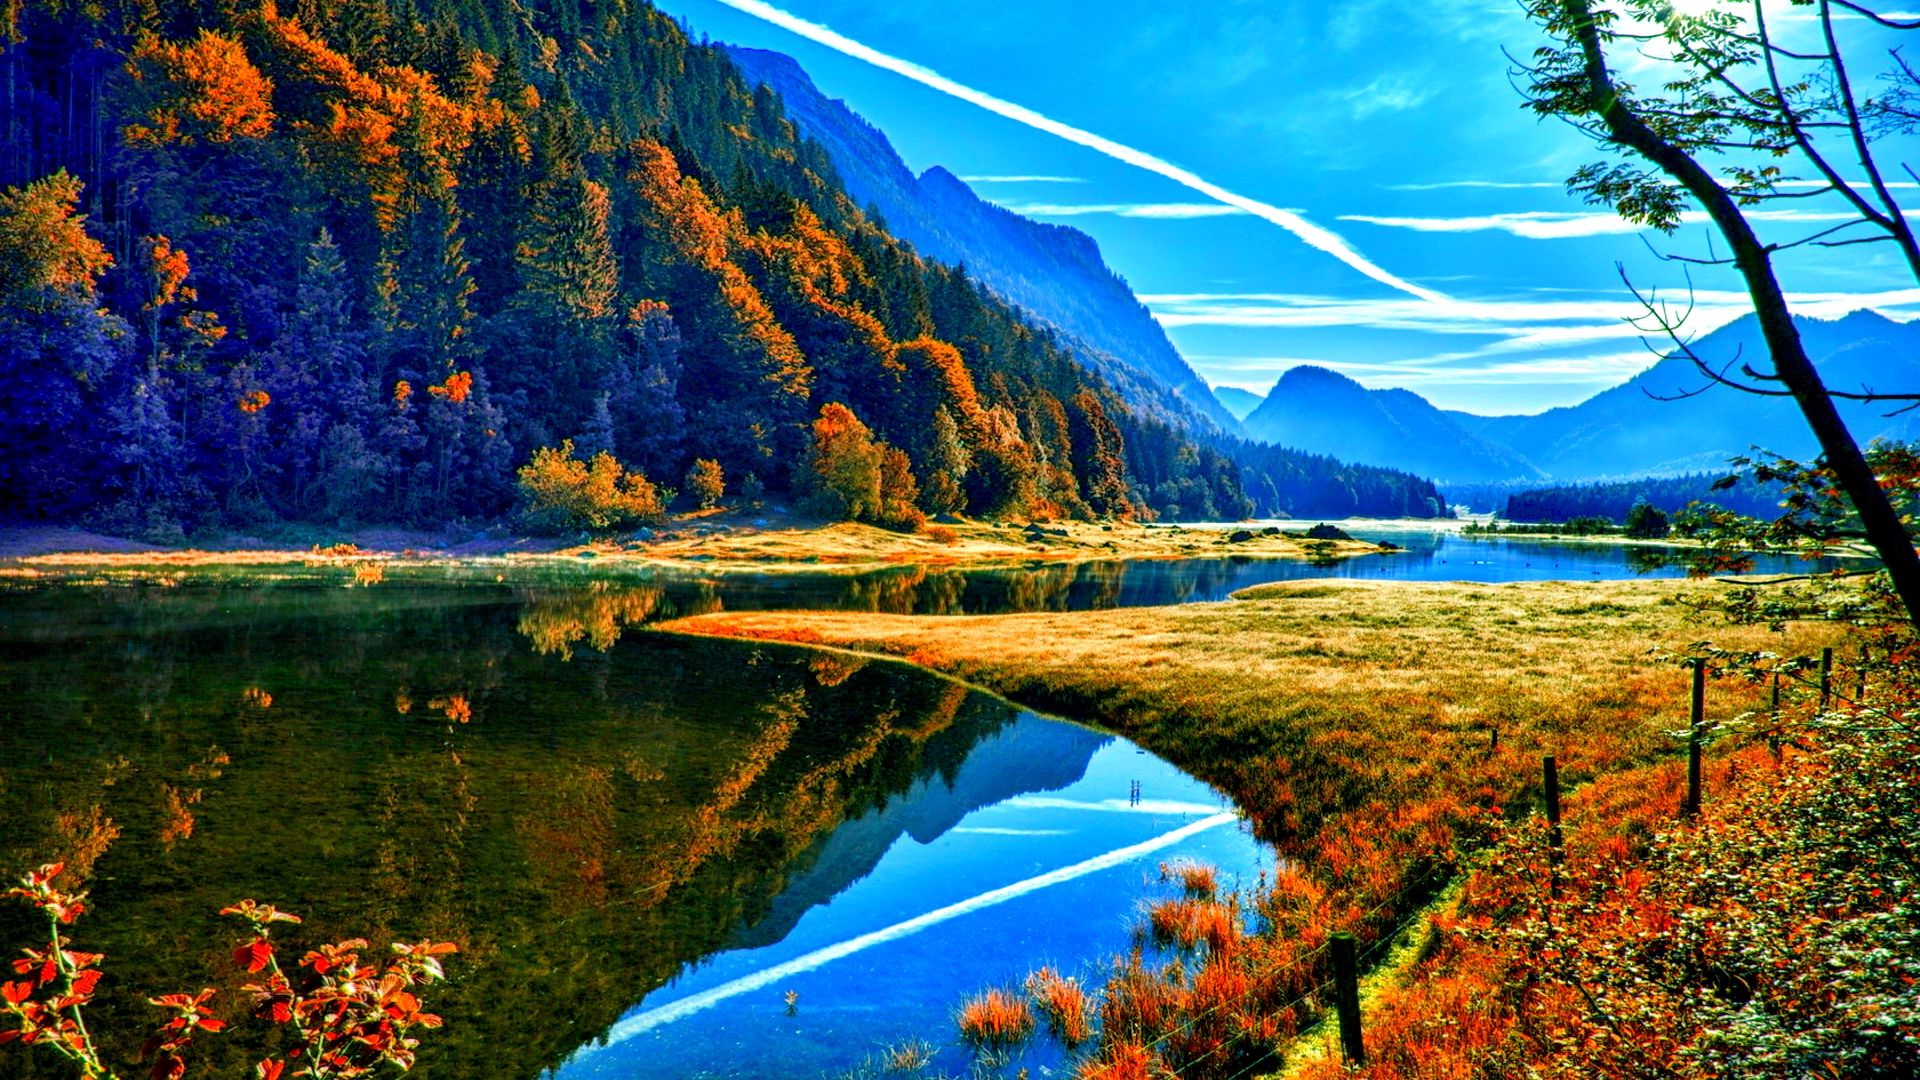  Landscape  HD Wallpaper  Background Image 1920x1080  ID 